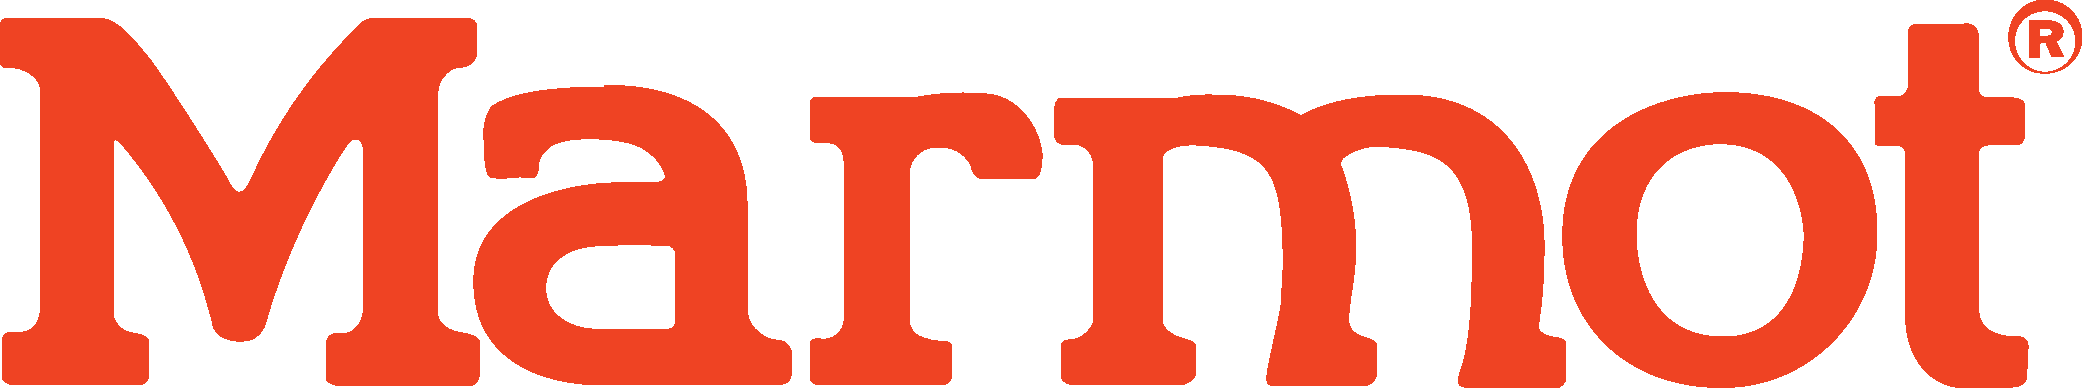 Marmot Logo png